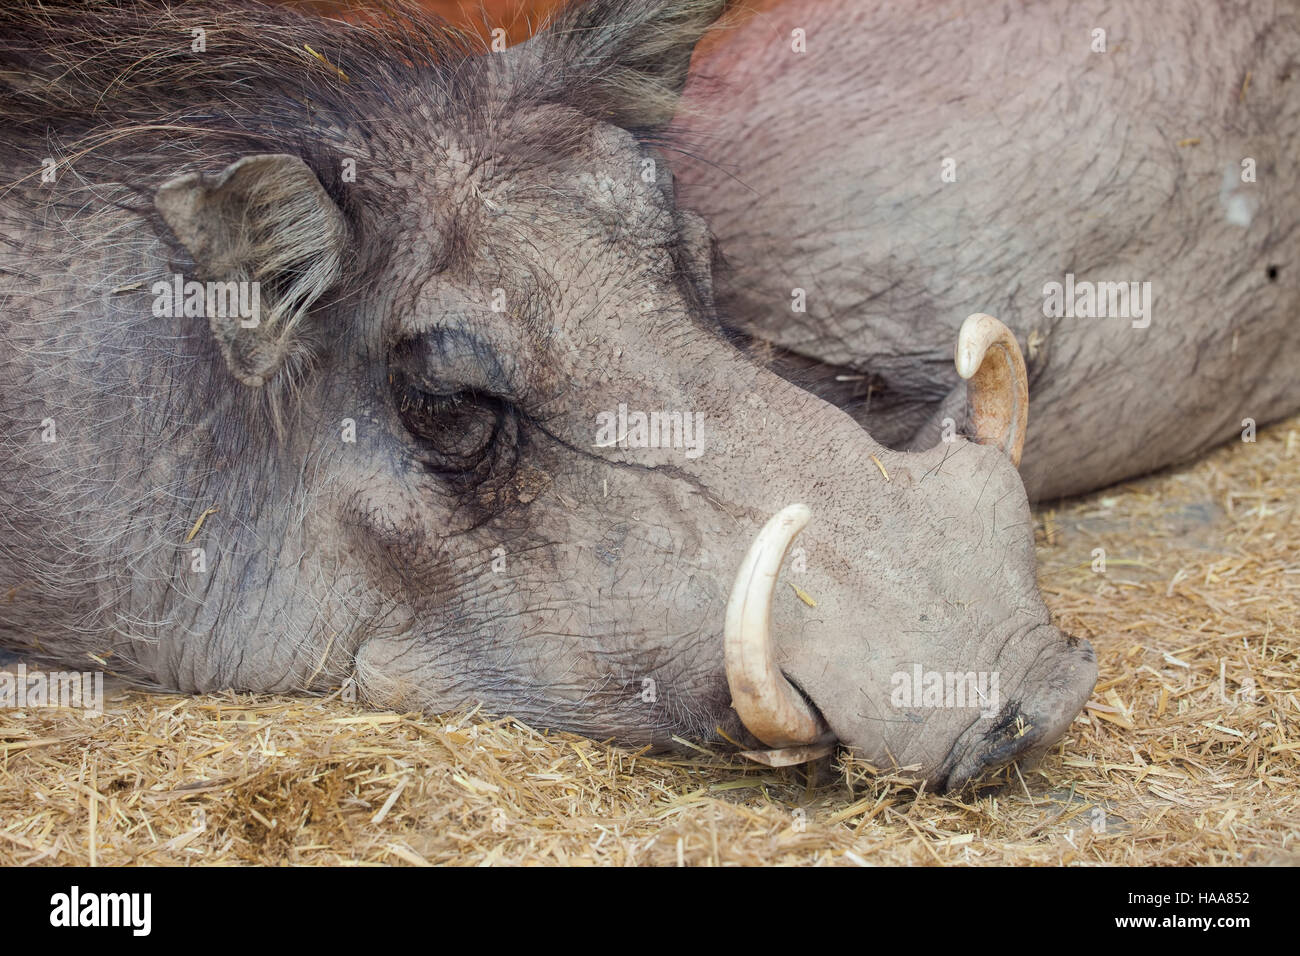 Sleeping warthog - Phacochoerus africanus, wild pig in the family Suidae Stock Photo